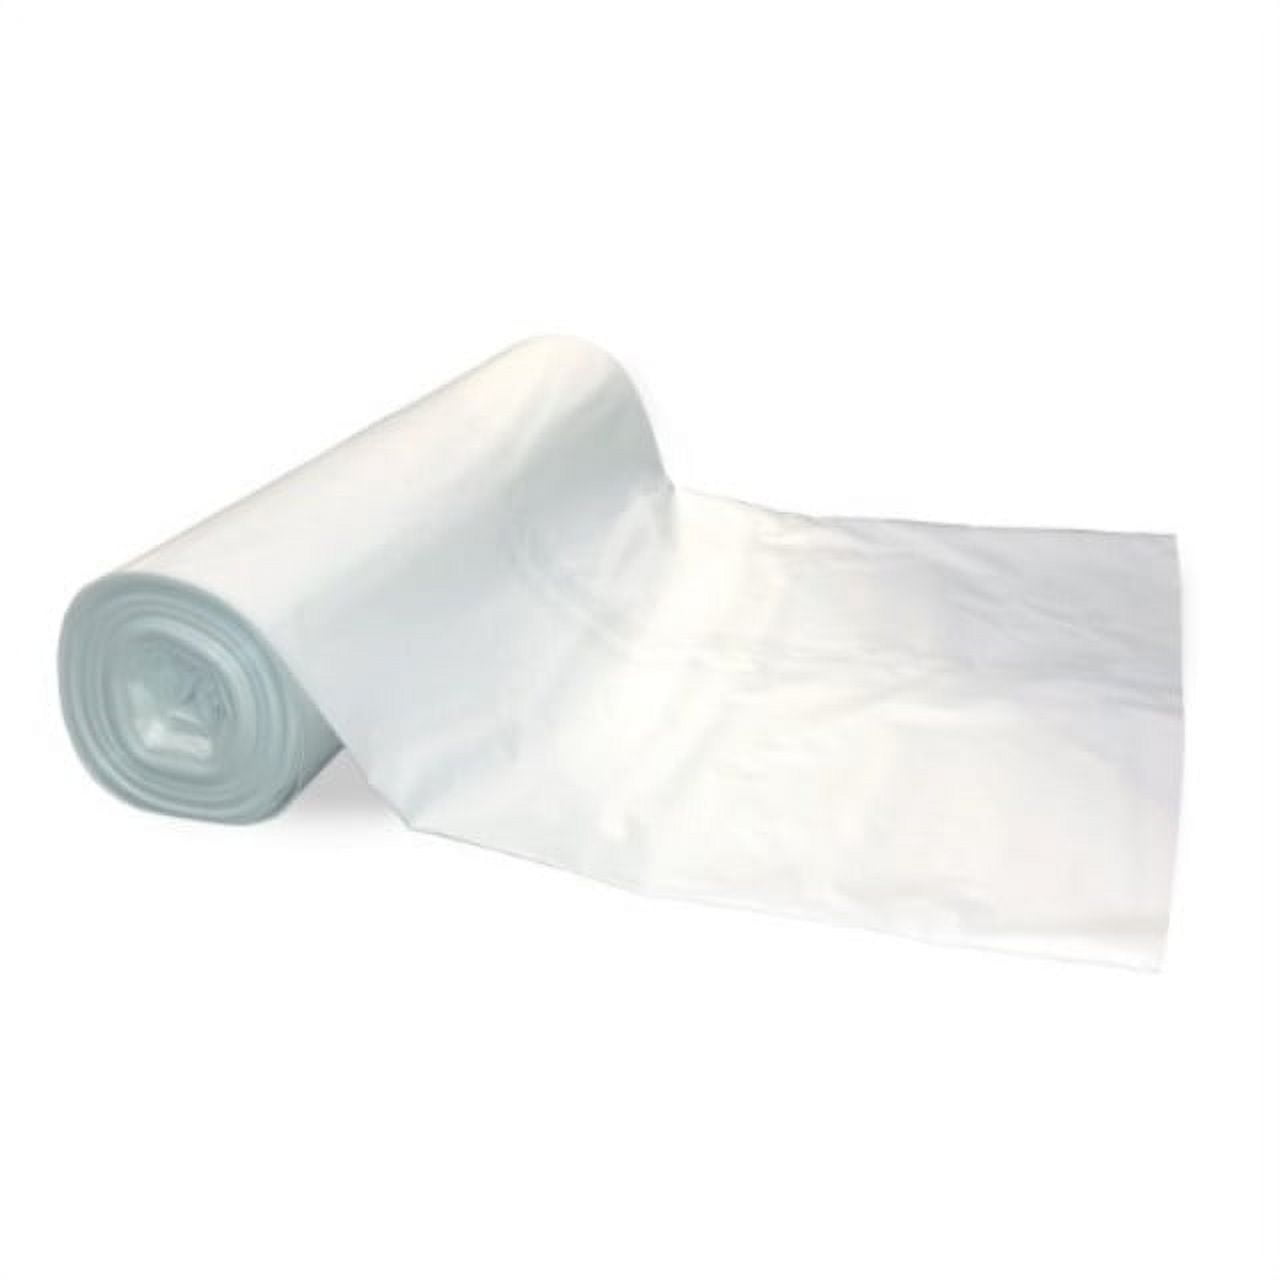 Farm Plastic Supply - Clear Plastic Sheeting - 8 mil - (10' x 100') - Thick  Plastic Sheeting, Heavy Duty Polyethylene Film, Drop Cloth Vapor Barrier